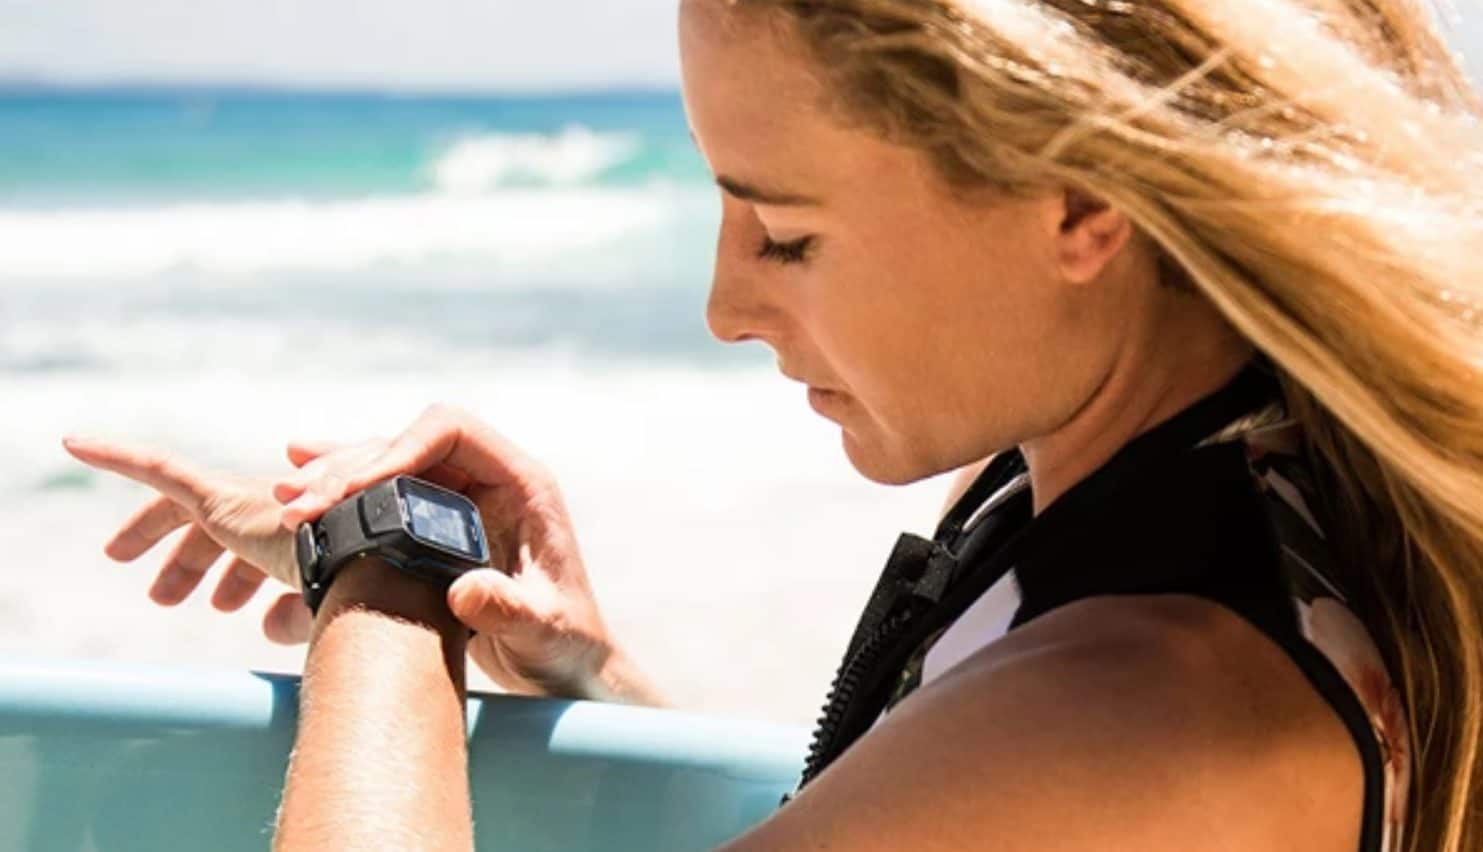 Garmin Instinct 2 Solar Surf: the surfer's smartwatch review